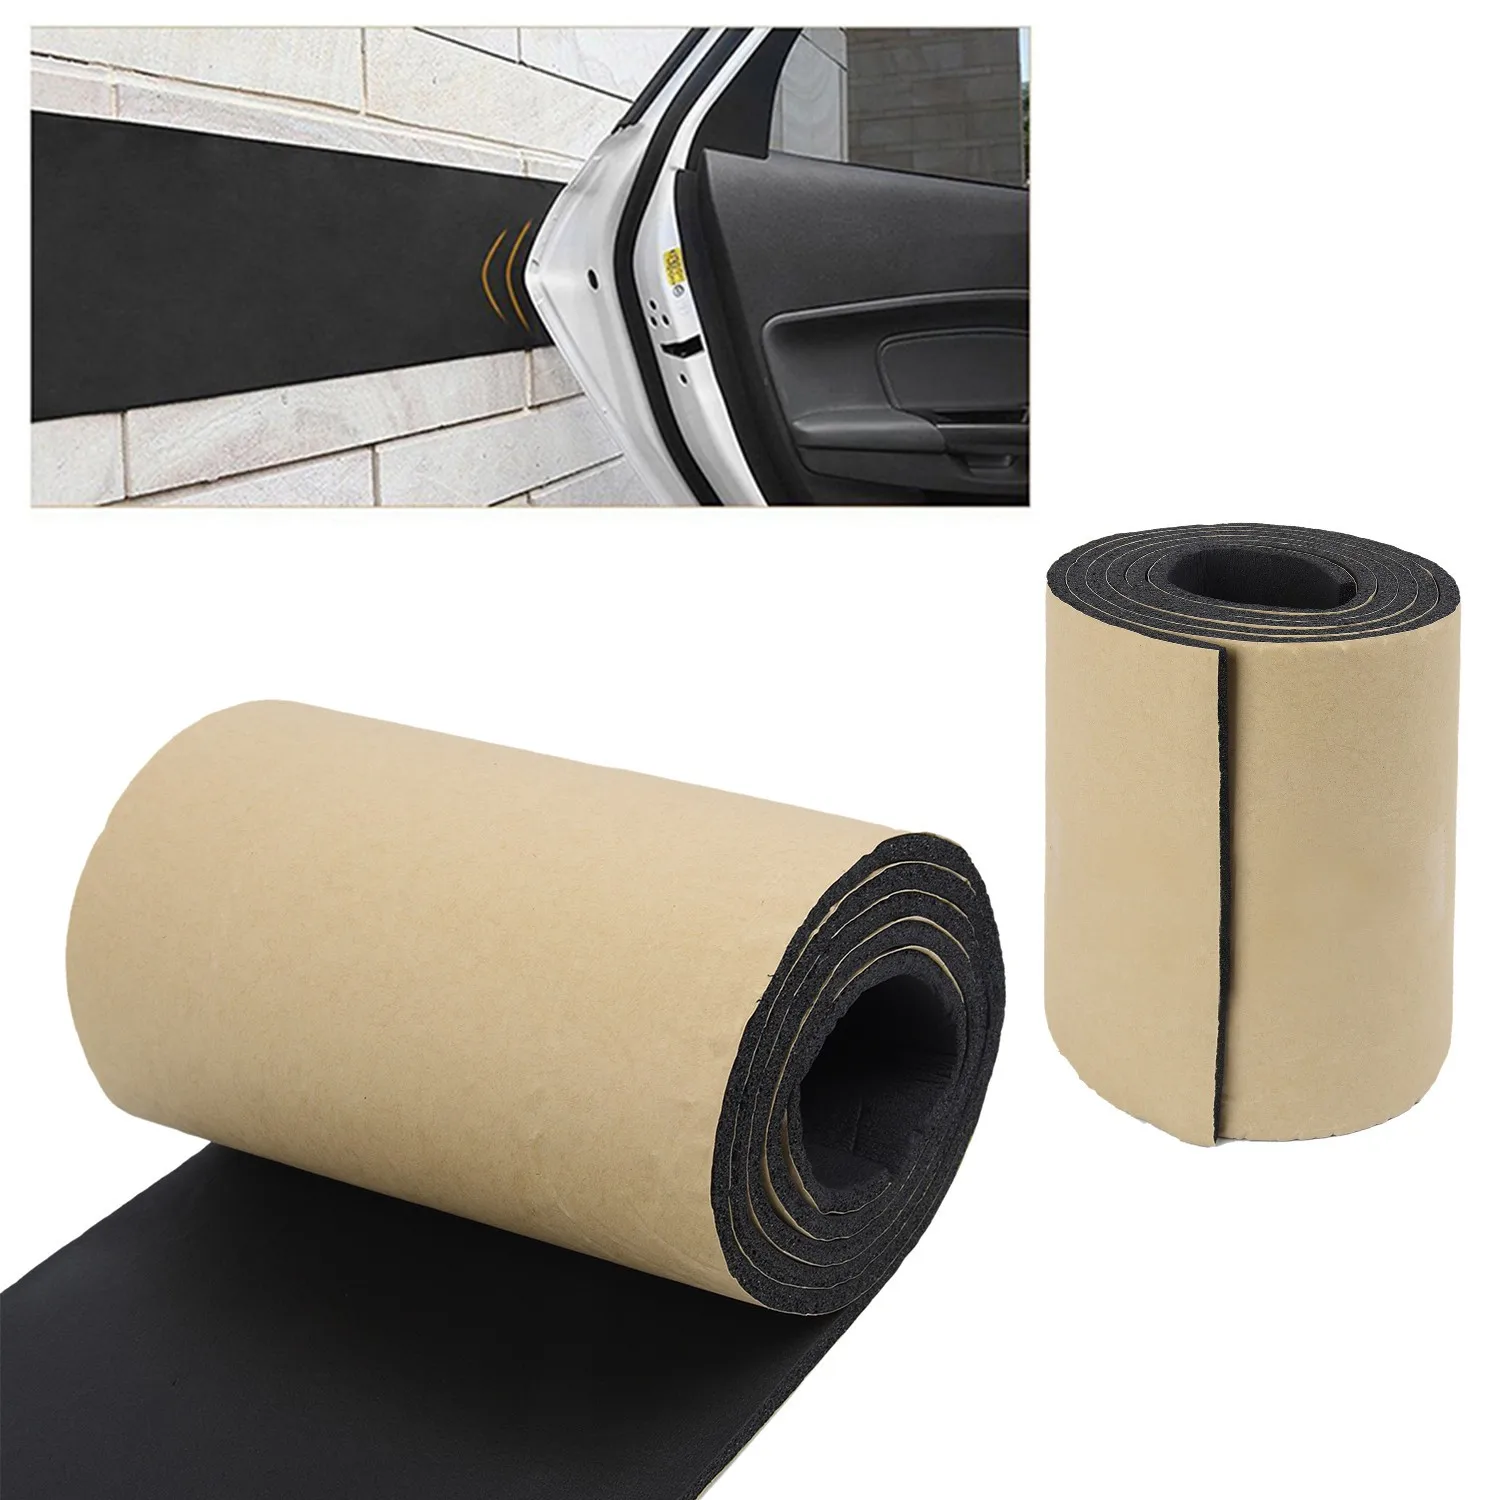 

50*20cm 6mm Car Door Protector Garage Rubber Wall Guard Bumper Safety Parking Rubber Plastic Cotton Scratch-resistant Foam Strip